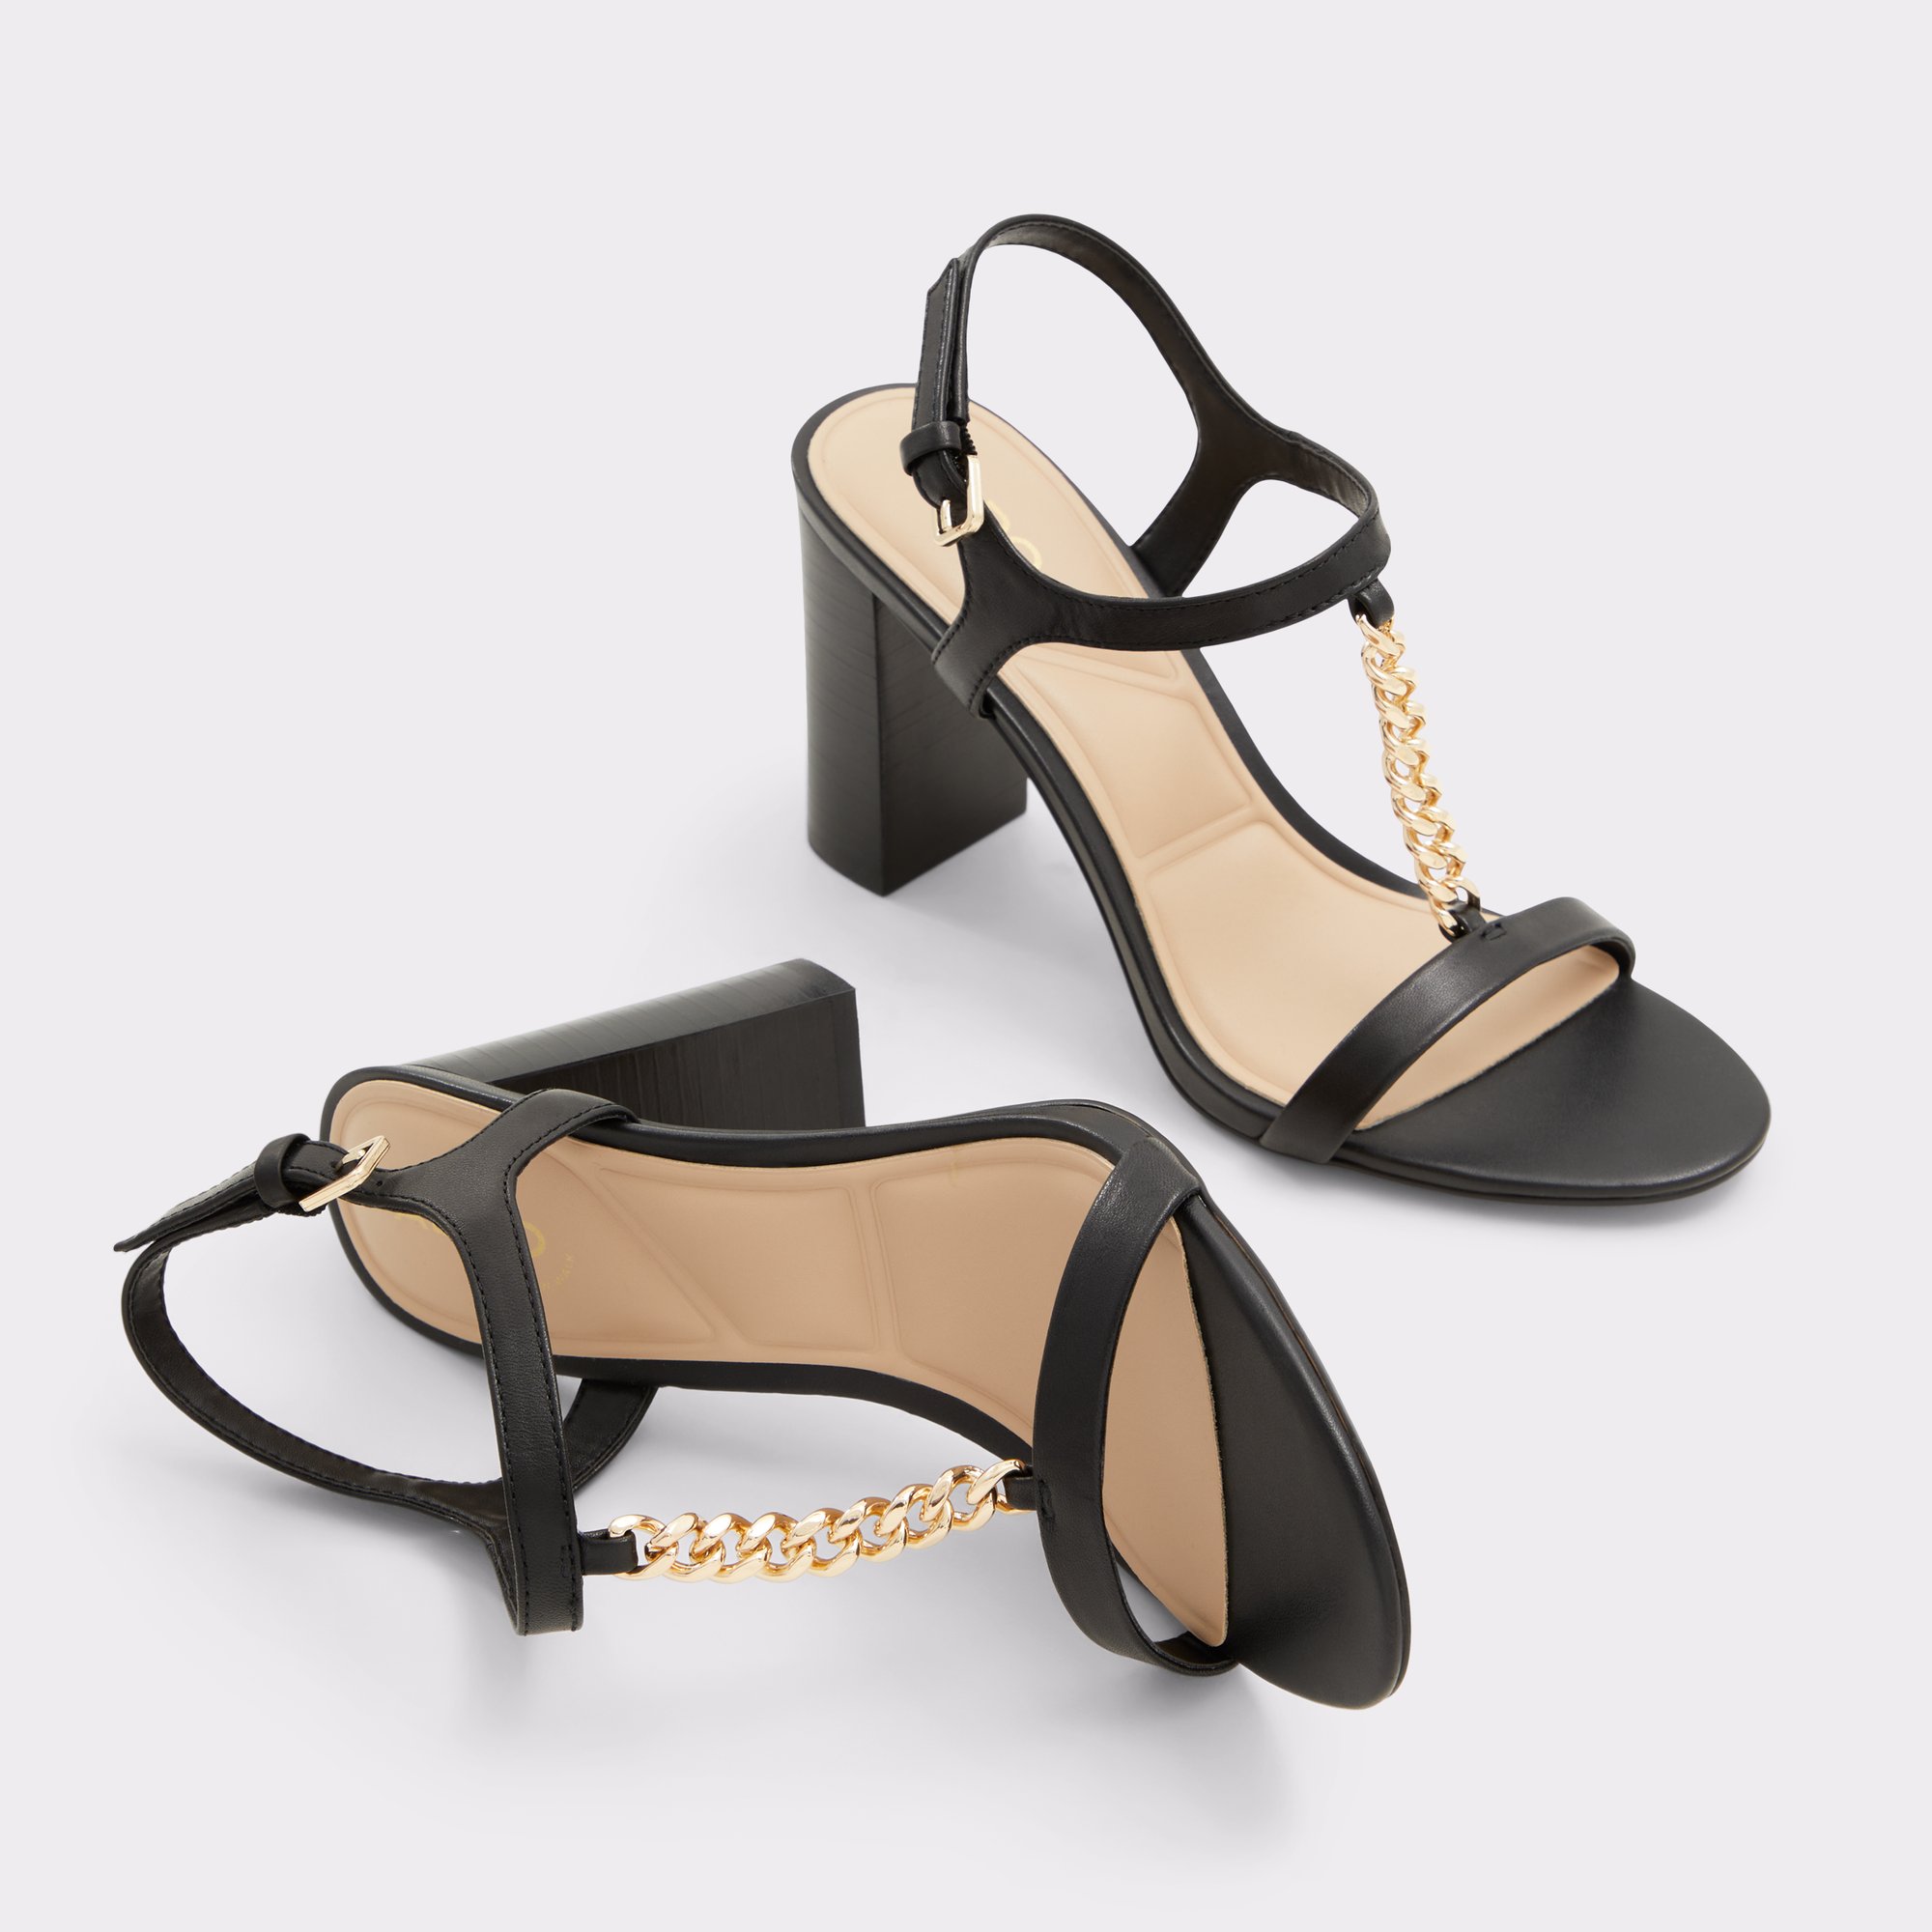 Clelia Black Women's Strappy sandals | ALDO US